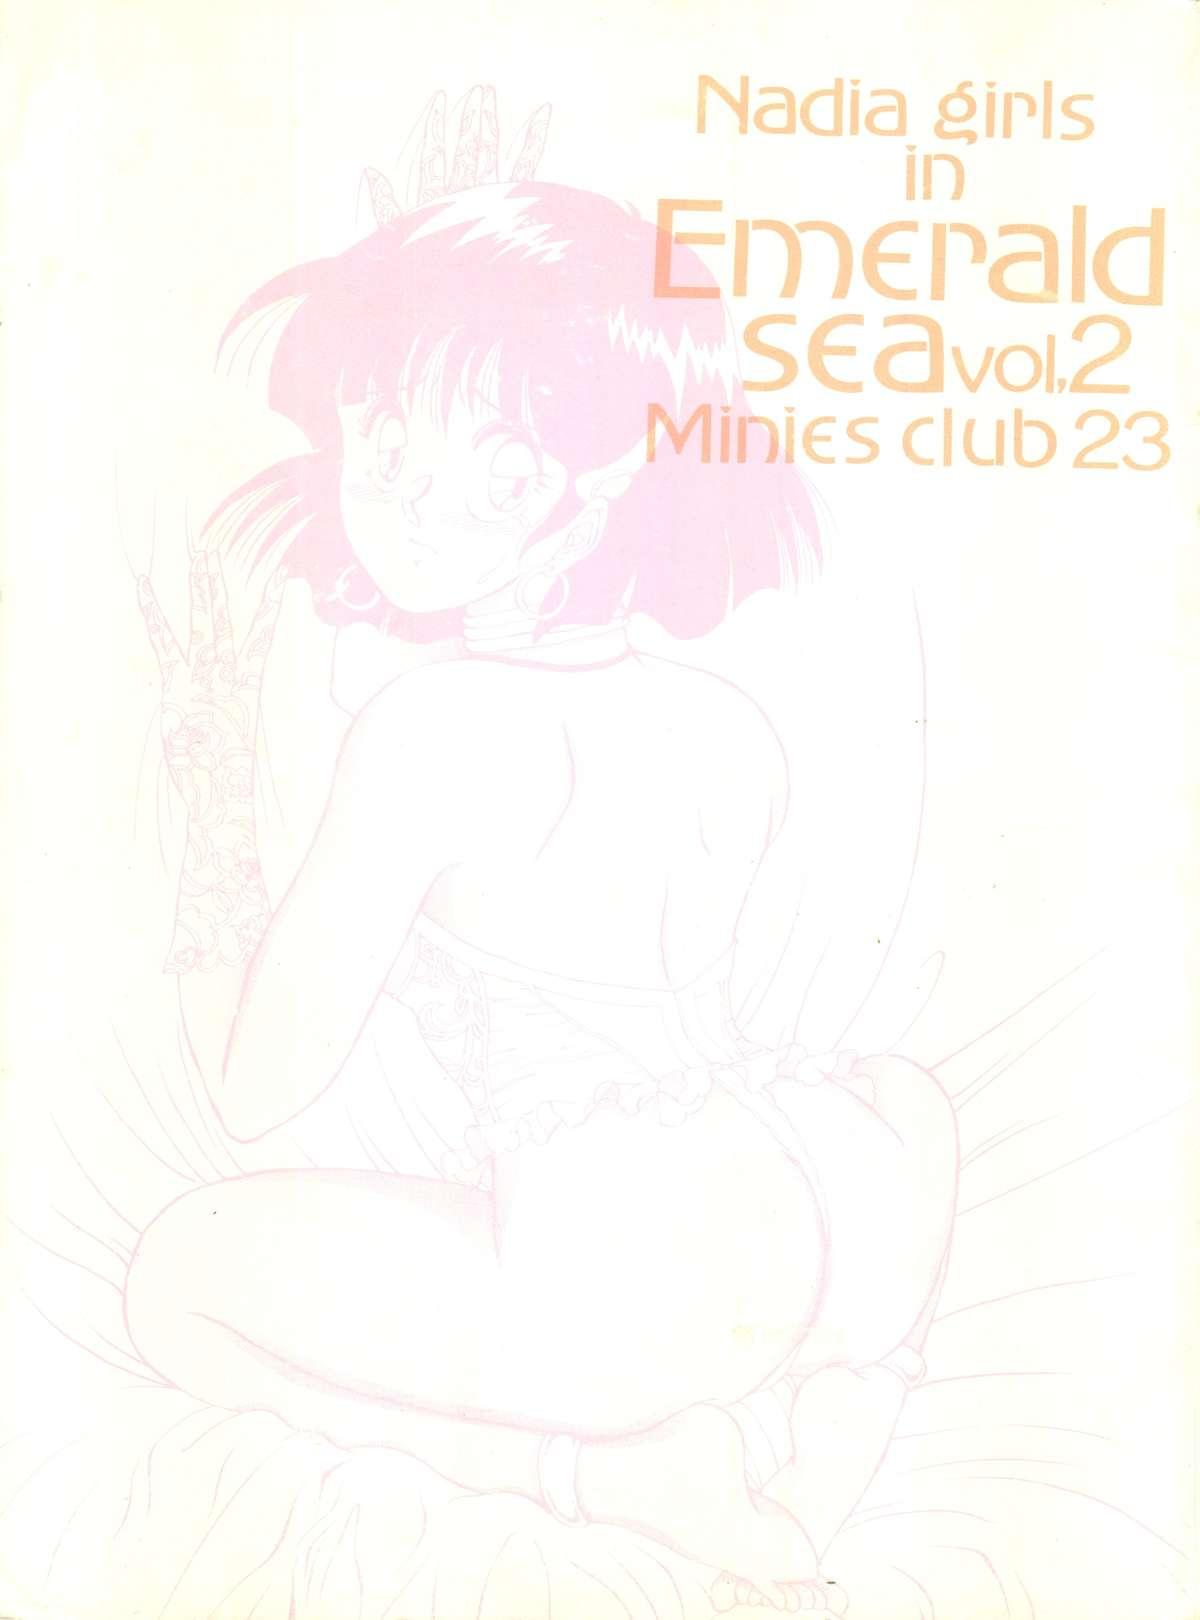 Dutch Nadia Girls in Emerald Sea vol. 2 - Minies Club 23 - Fushigi no umi no nadia Camgirl - Picture 1